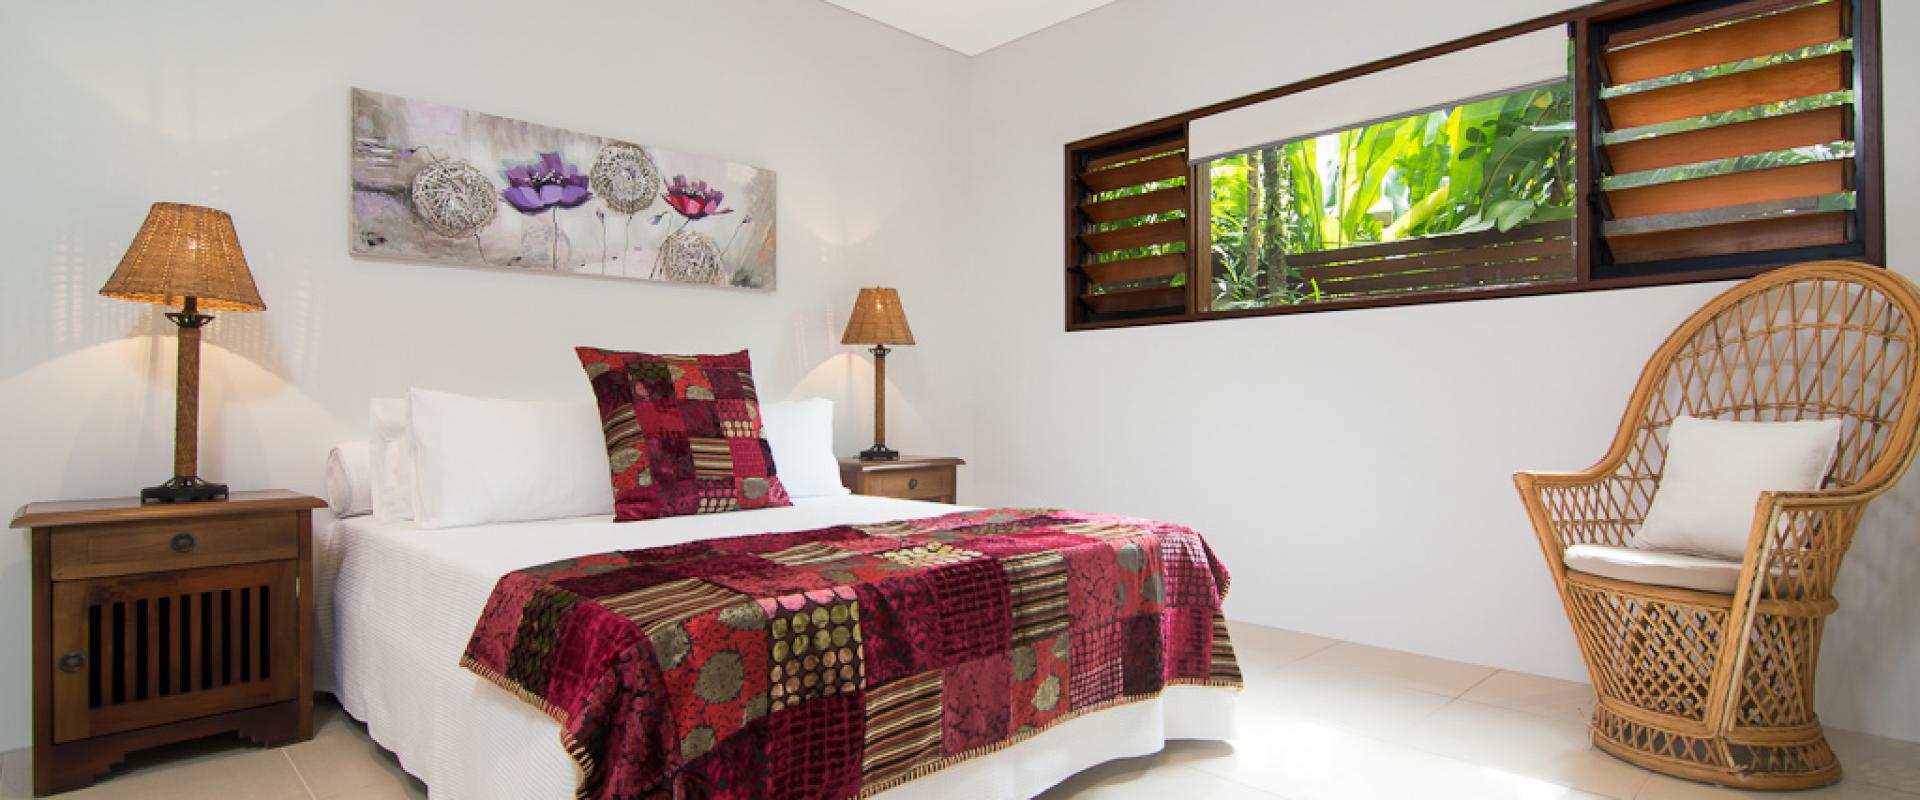 Luxury 5 bedroom home near Four Mile Beach Port Douglas